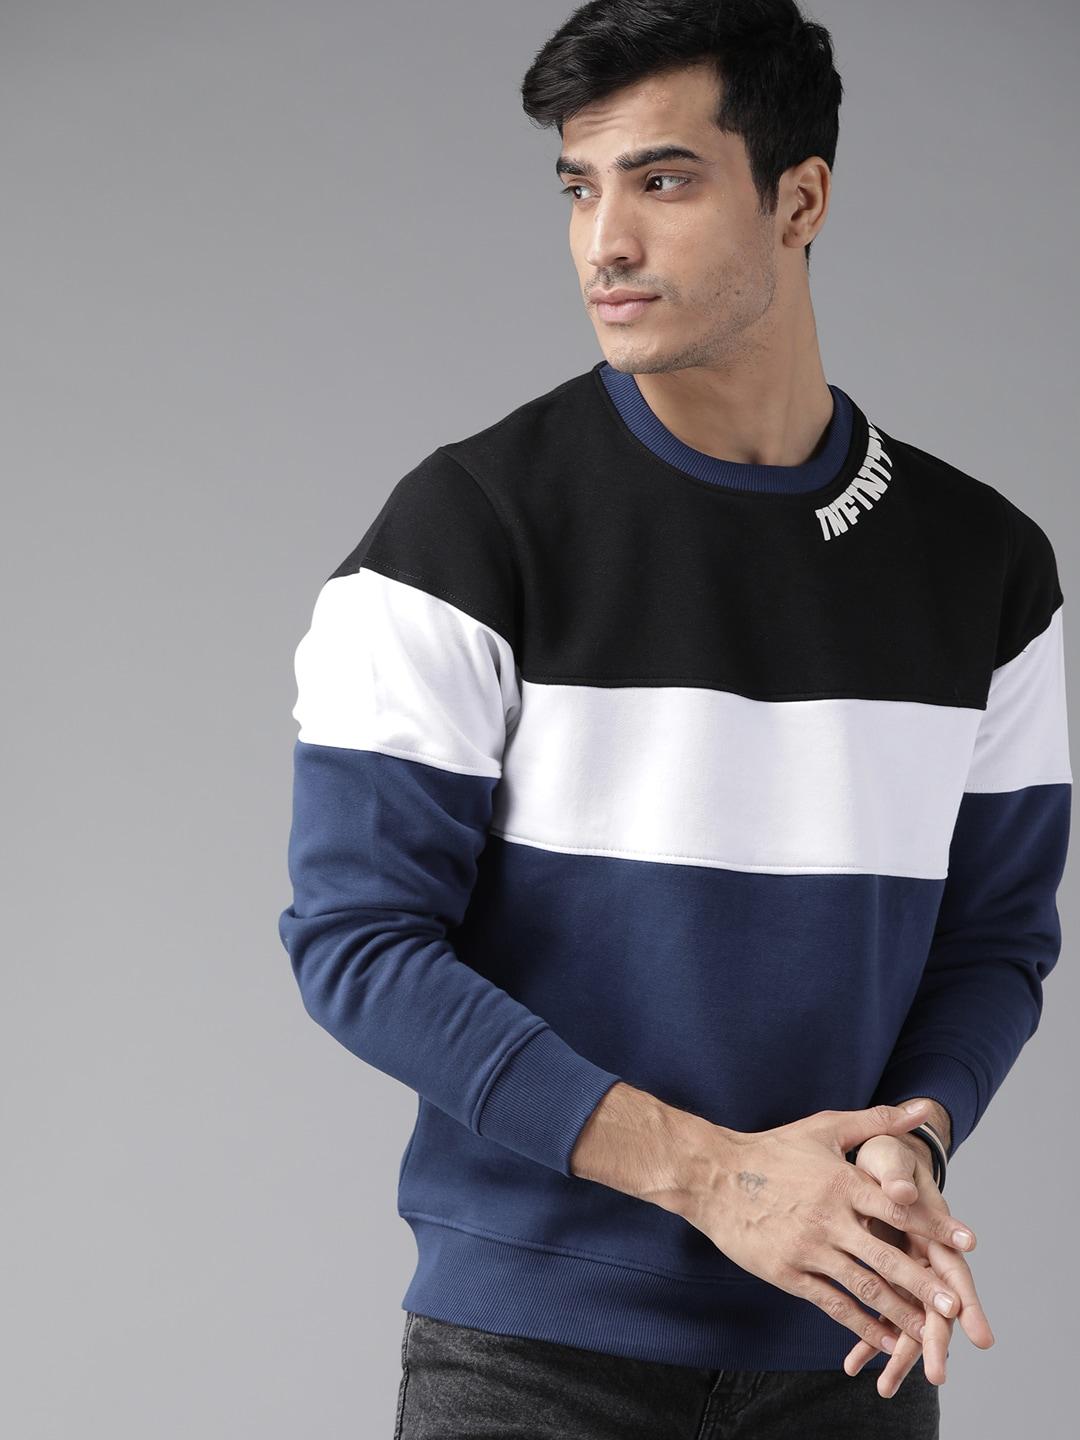 the roadster lifestyle co men blue & white colourblocked sweatshirt